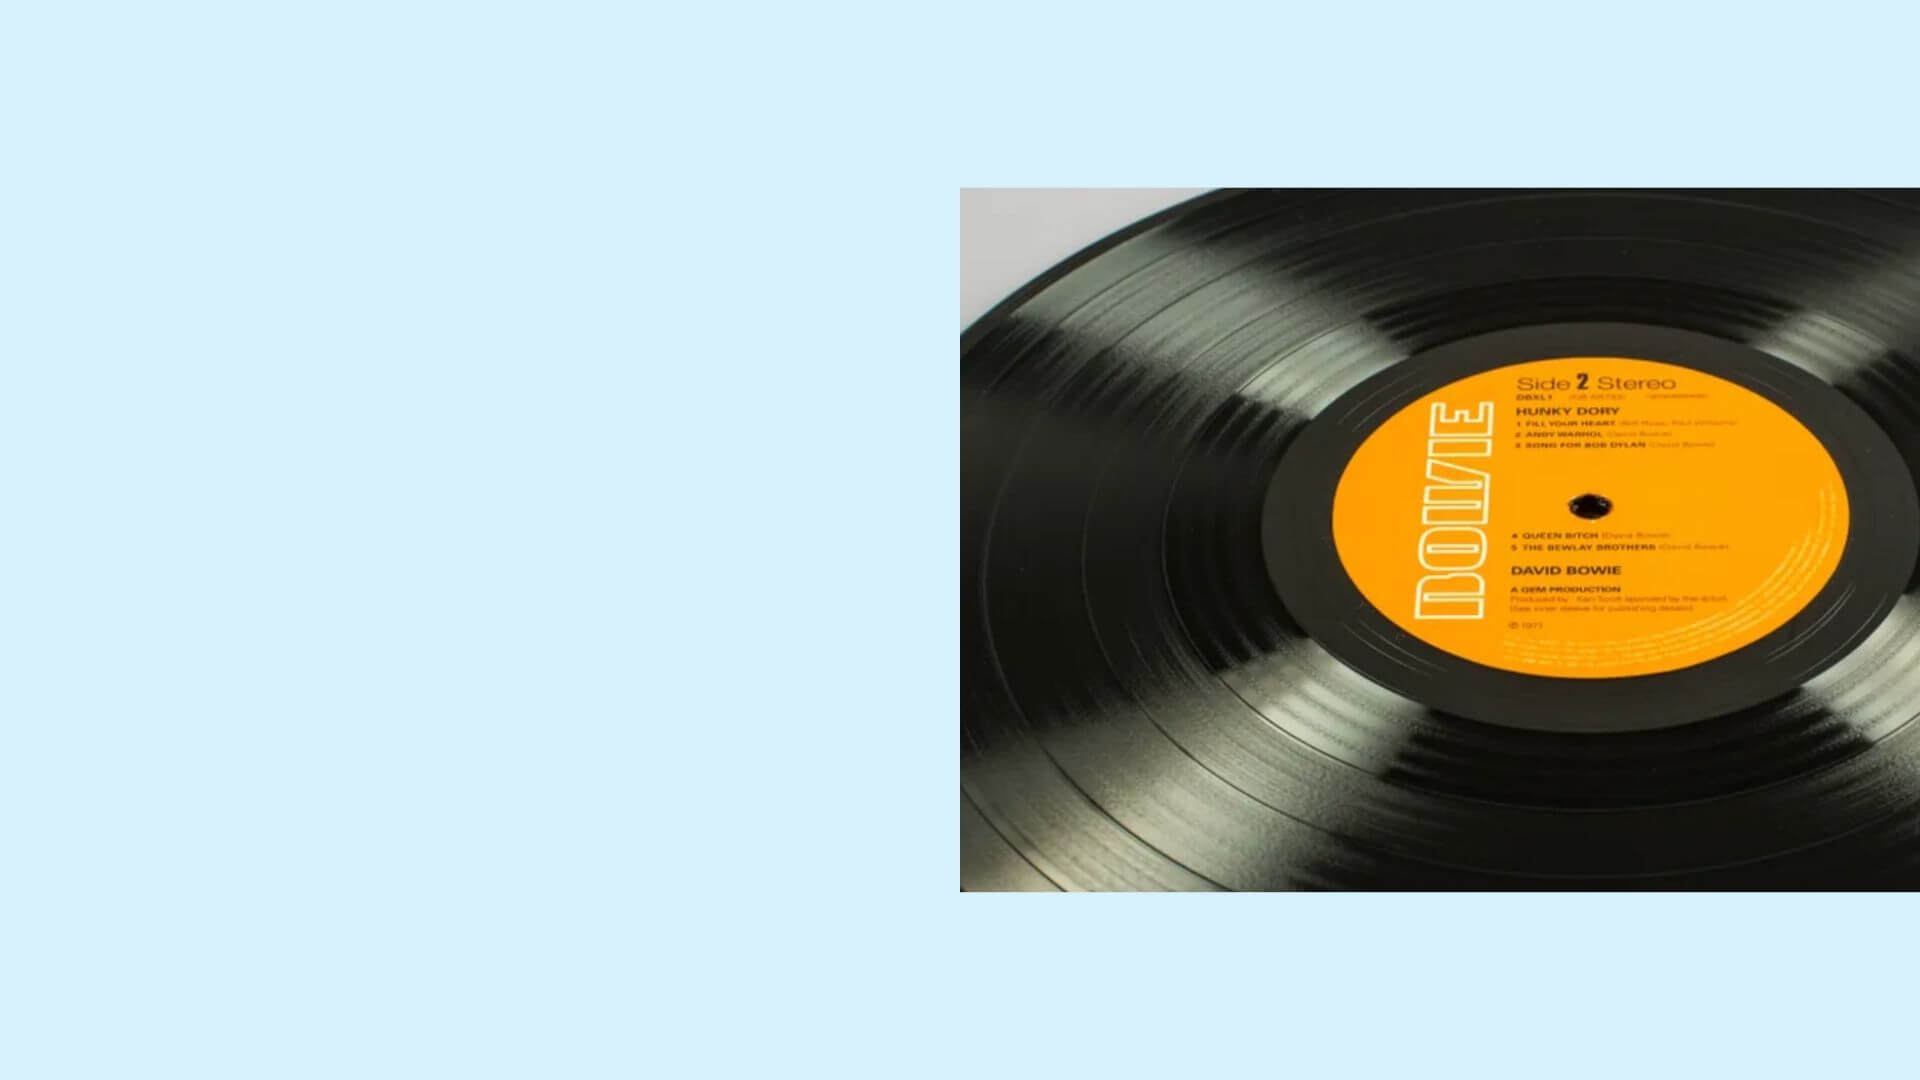 33 vs 45 Vinyl (Record Sizes Explained) - Tech Reviews